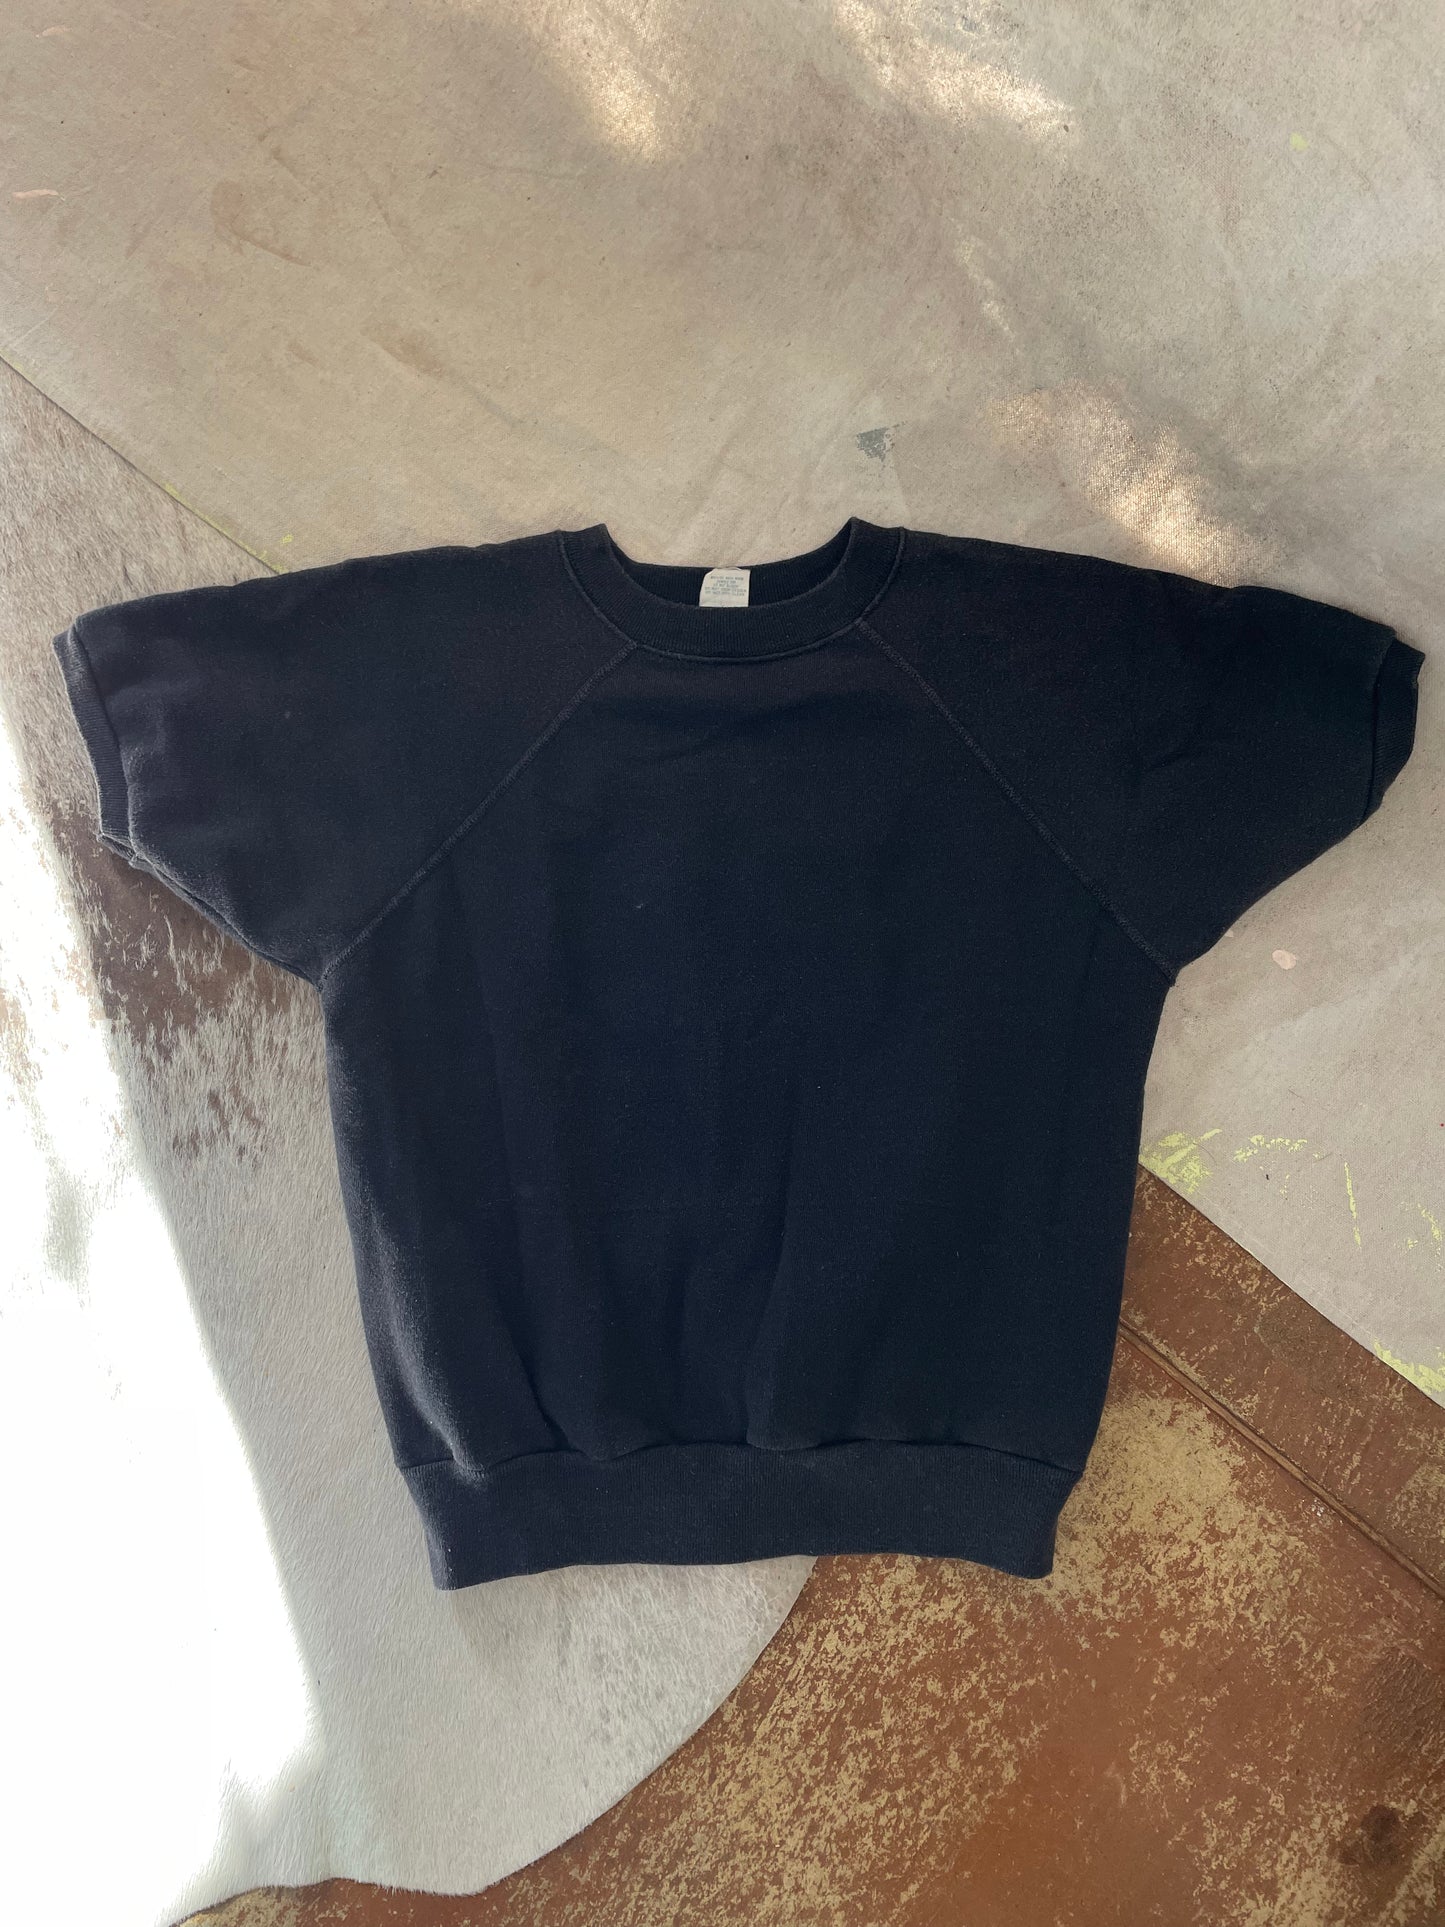 70s/80s Blank Black Short Sleeve Sweatshirt